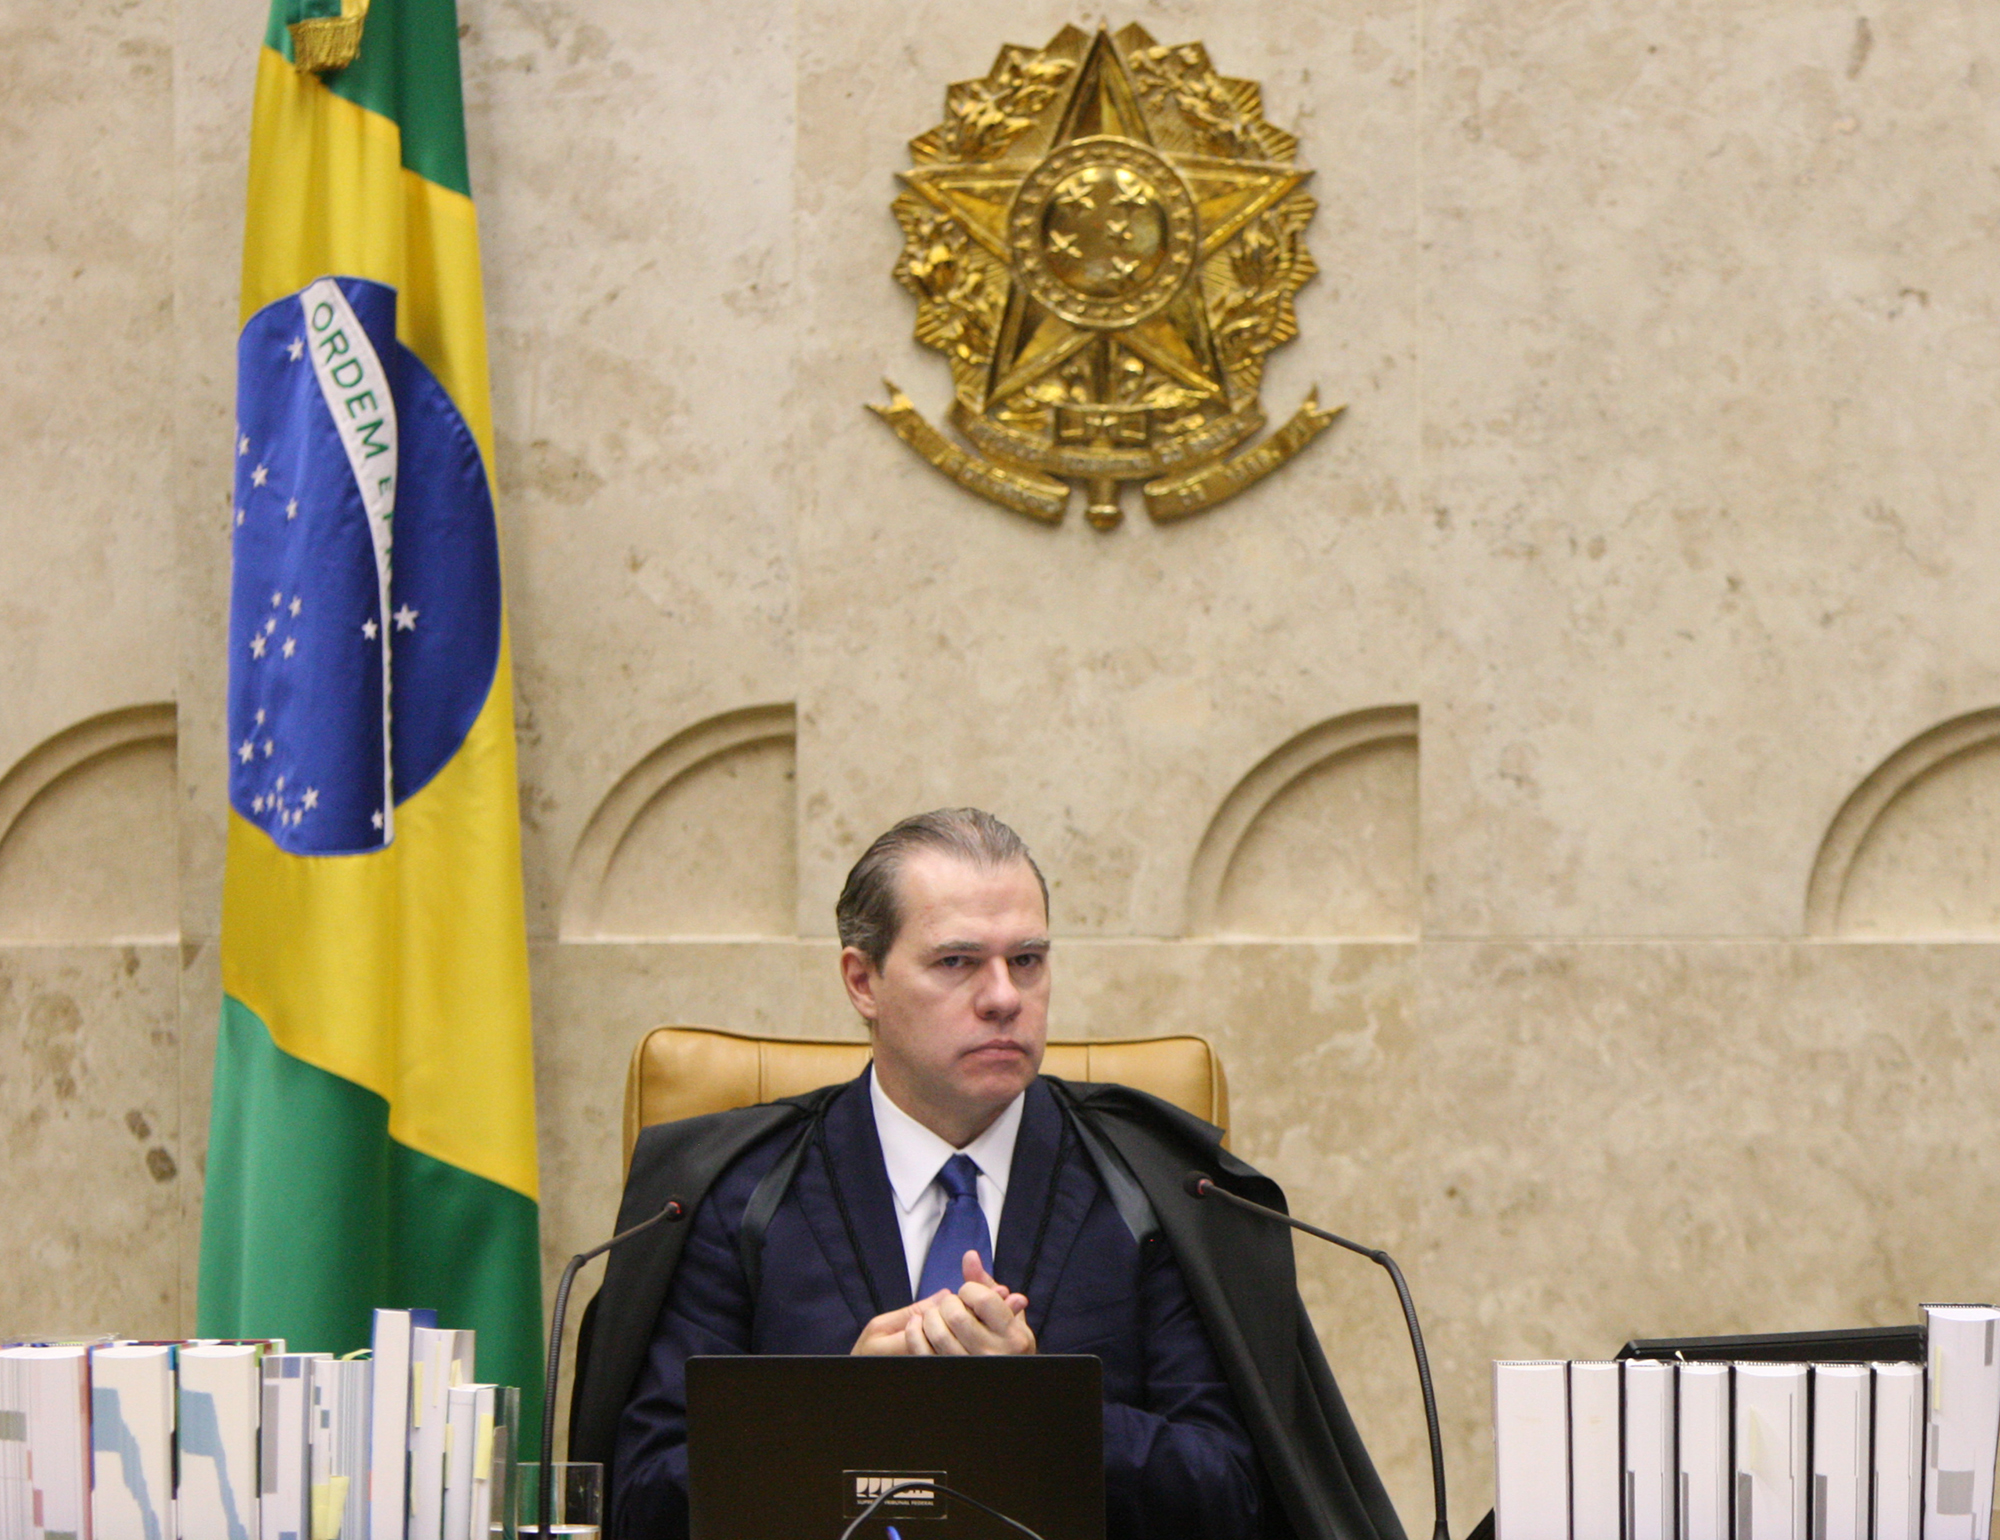 Izaías Gomes Ferro Júnior